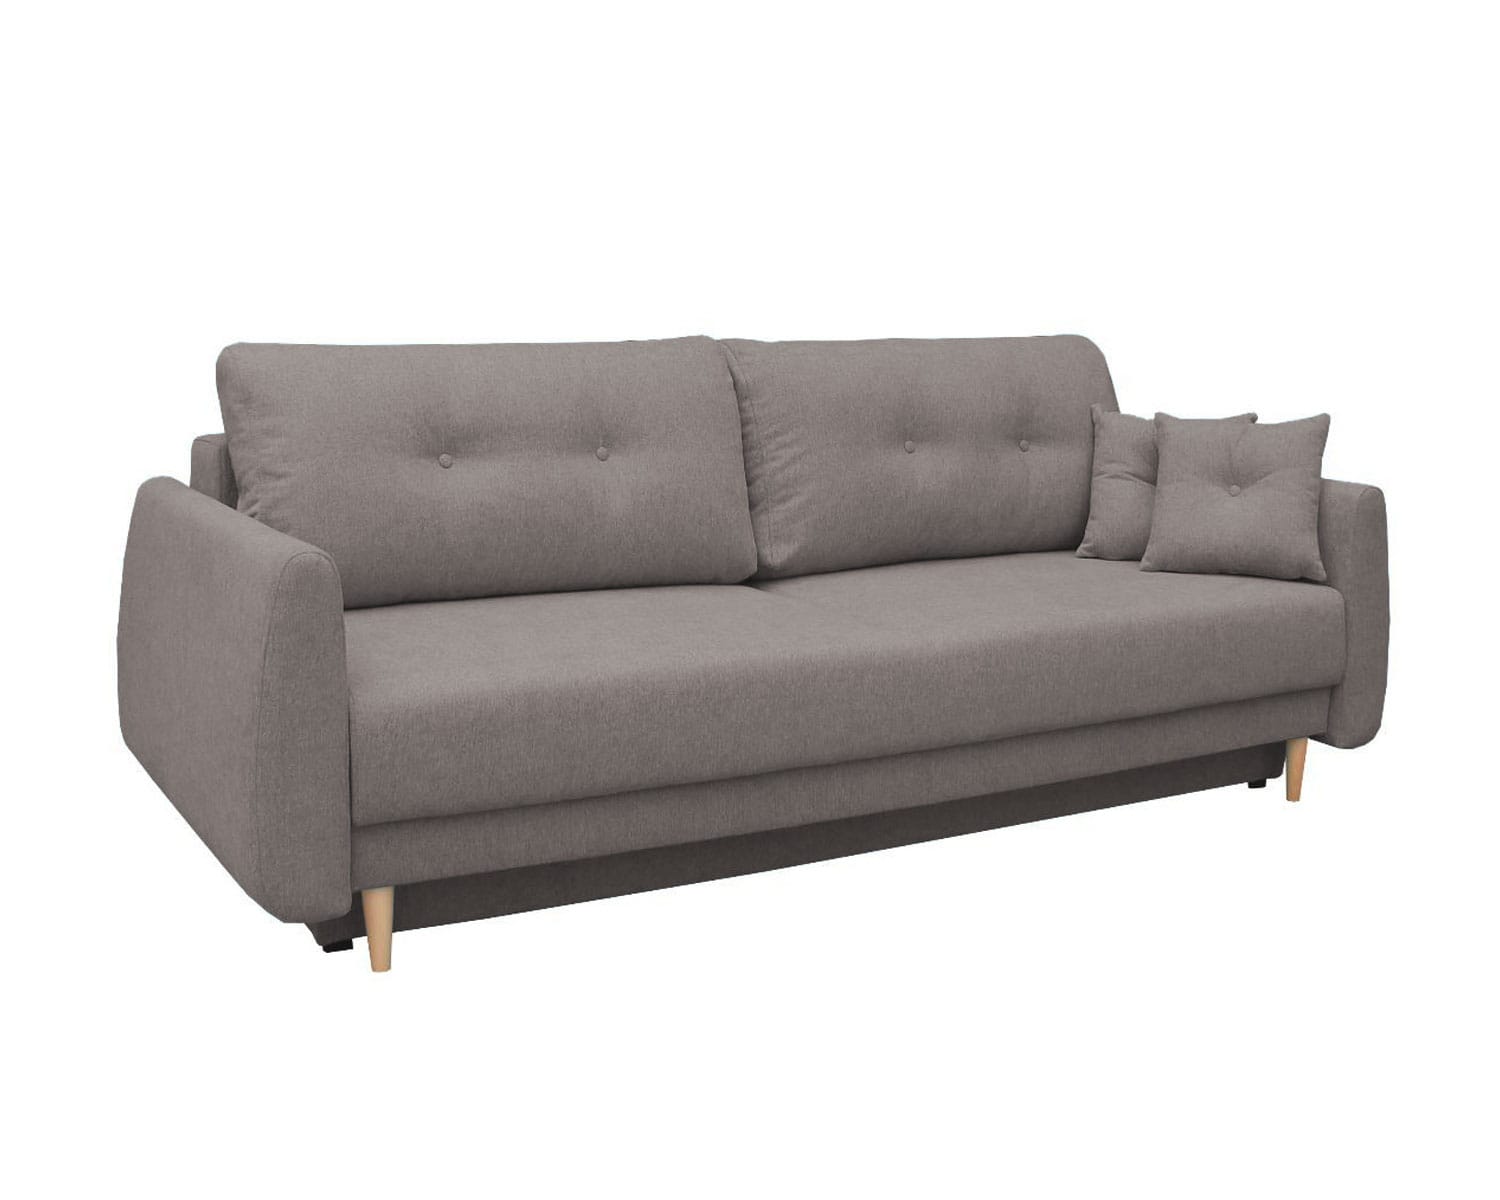 Nord Sofa Bed Sleeper Gray w/Storage by Prestige Furnishings